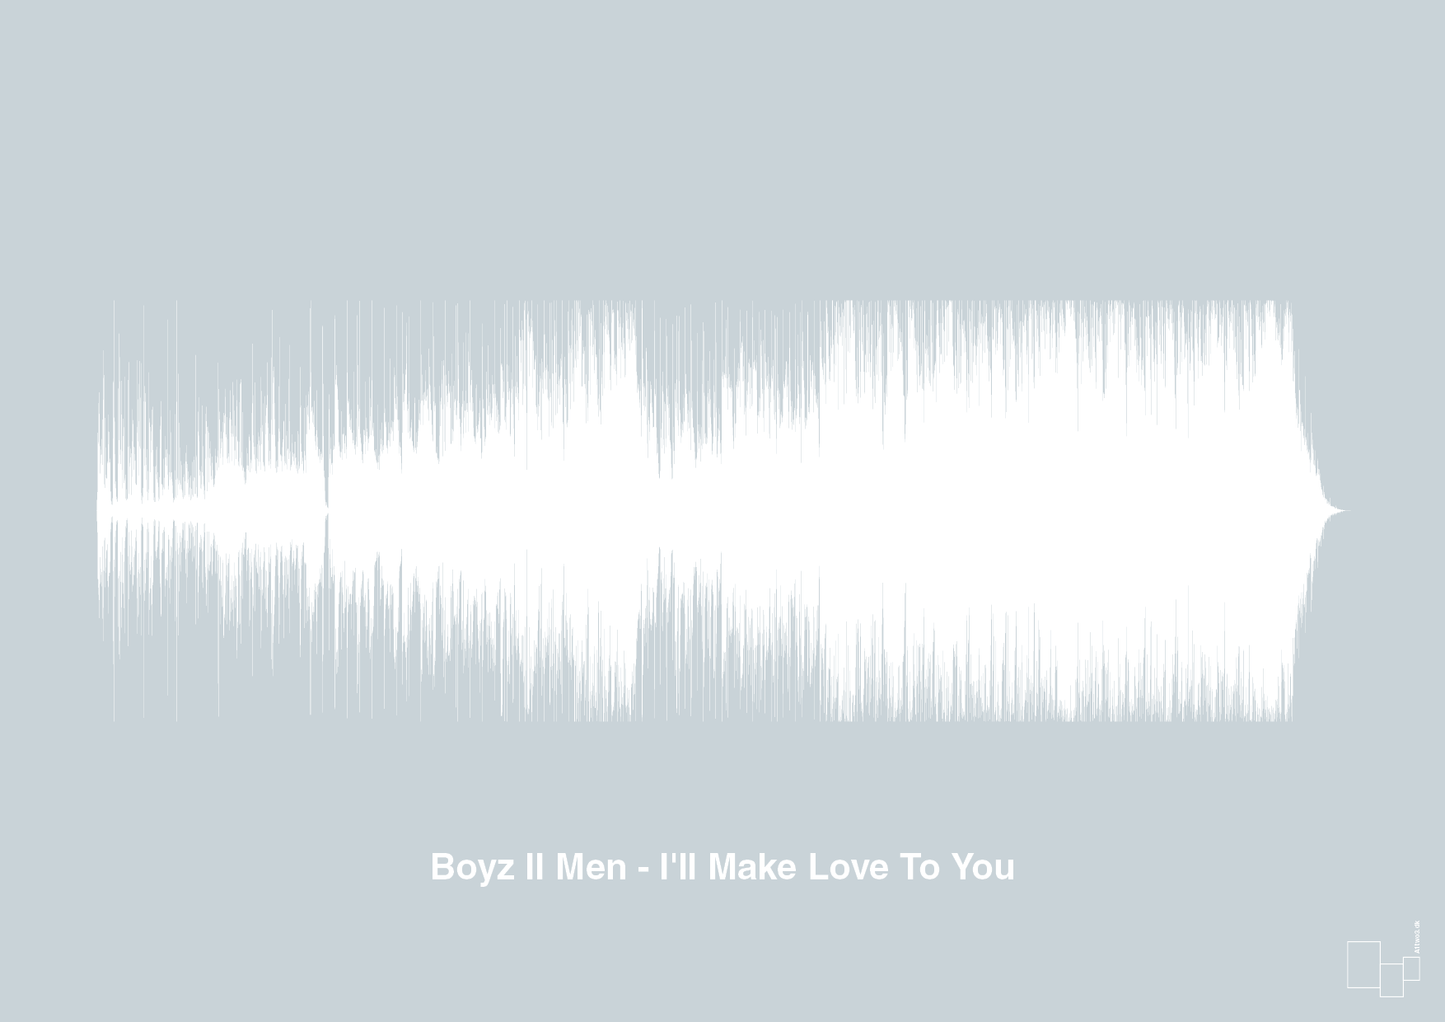 boyz II men - i'll make love to you - Plakat med Musik i Light Drizzle